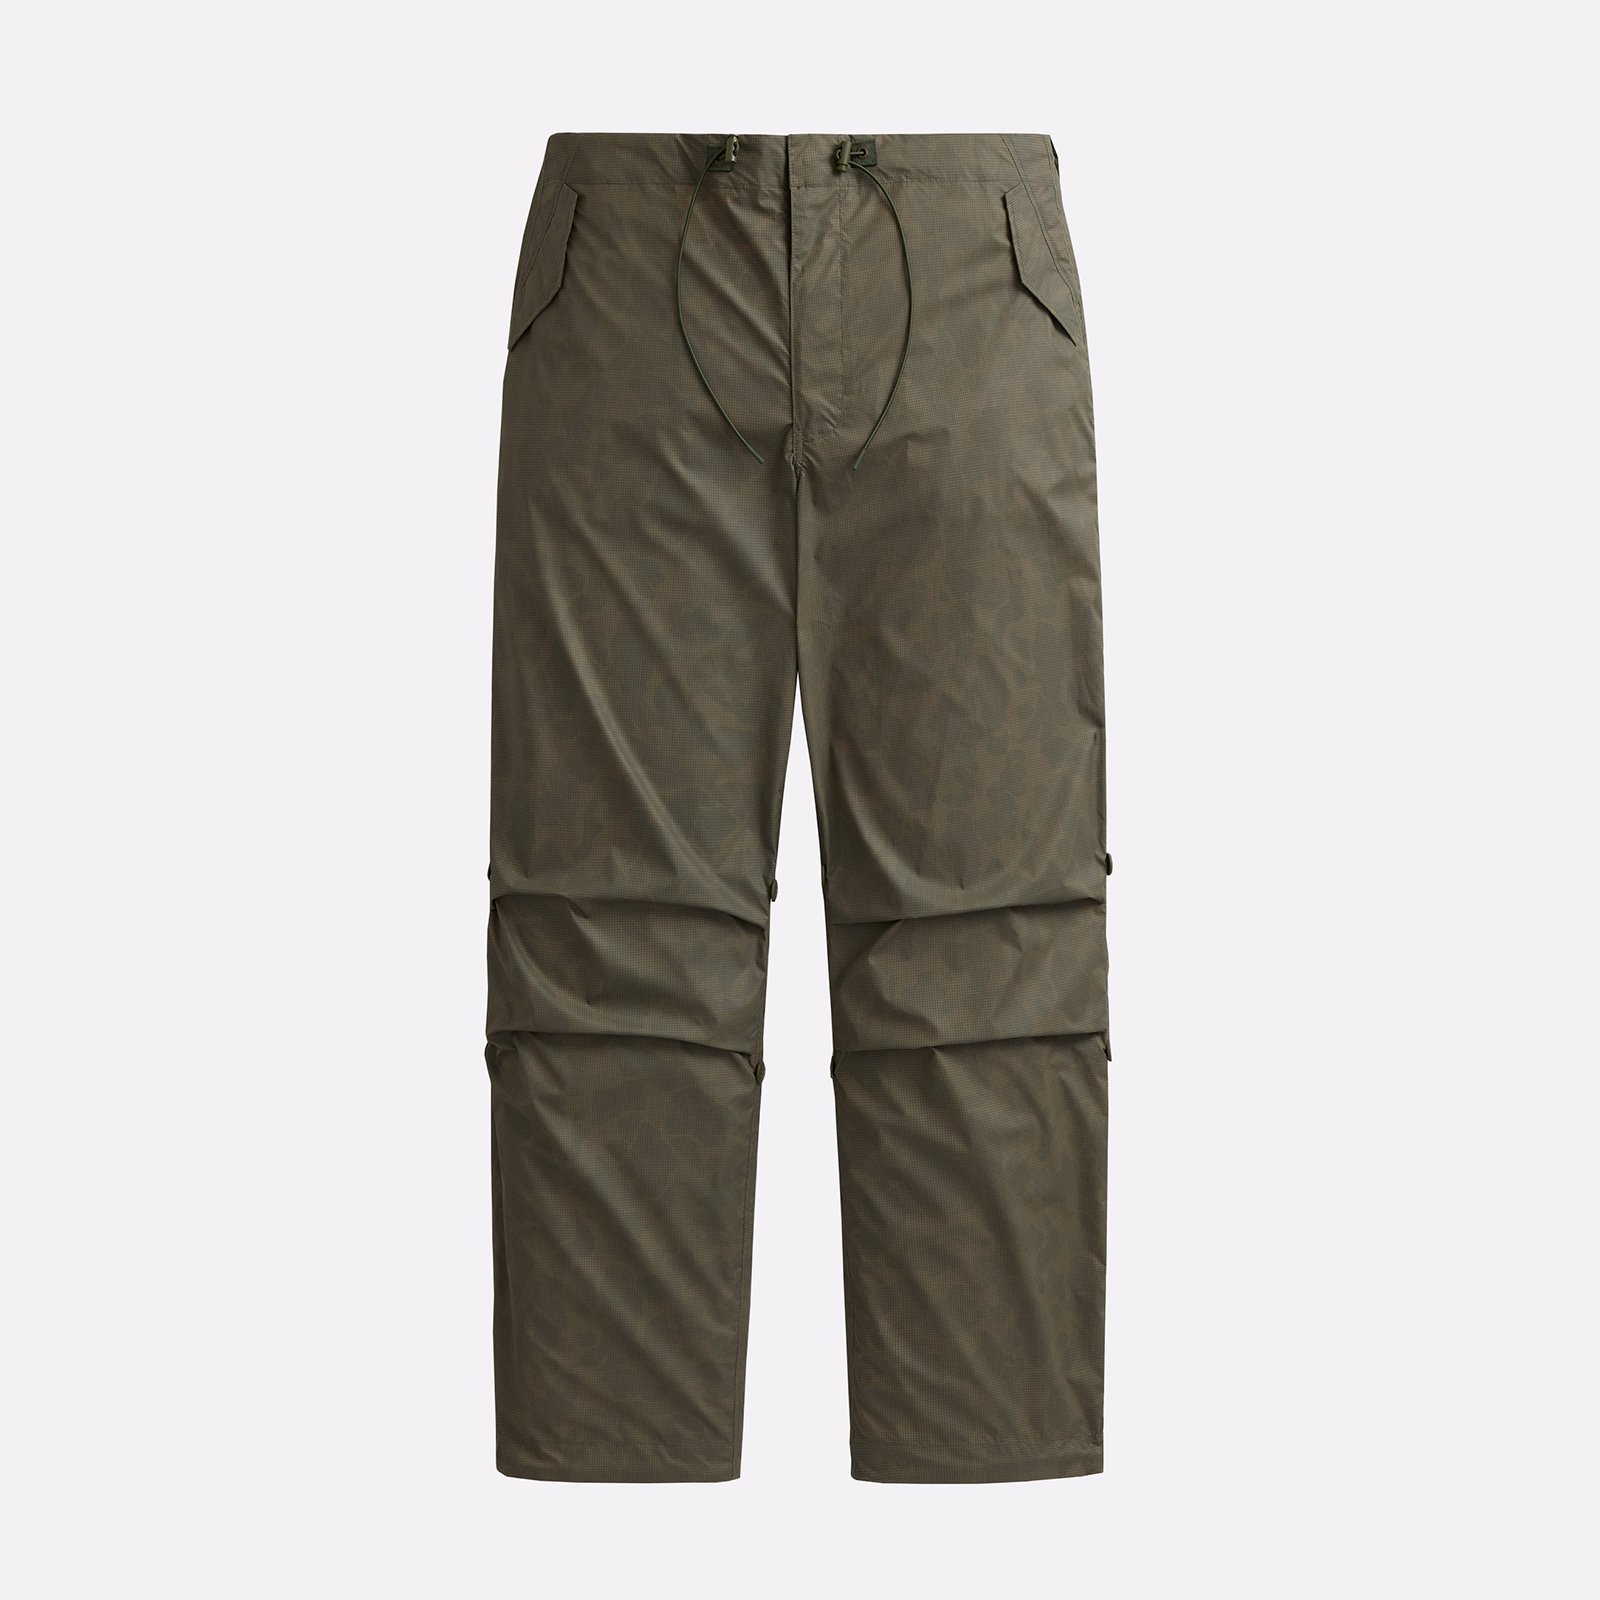 мужские зеленые брюки Alpha Industries Ripstop Parachute Pants UBU54001C1-OG-107-green - цена, описание, фото 1